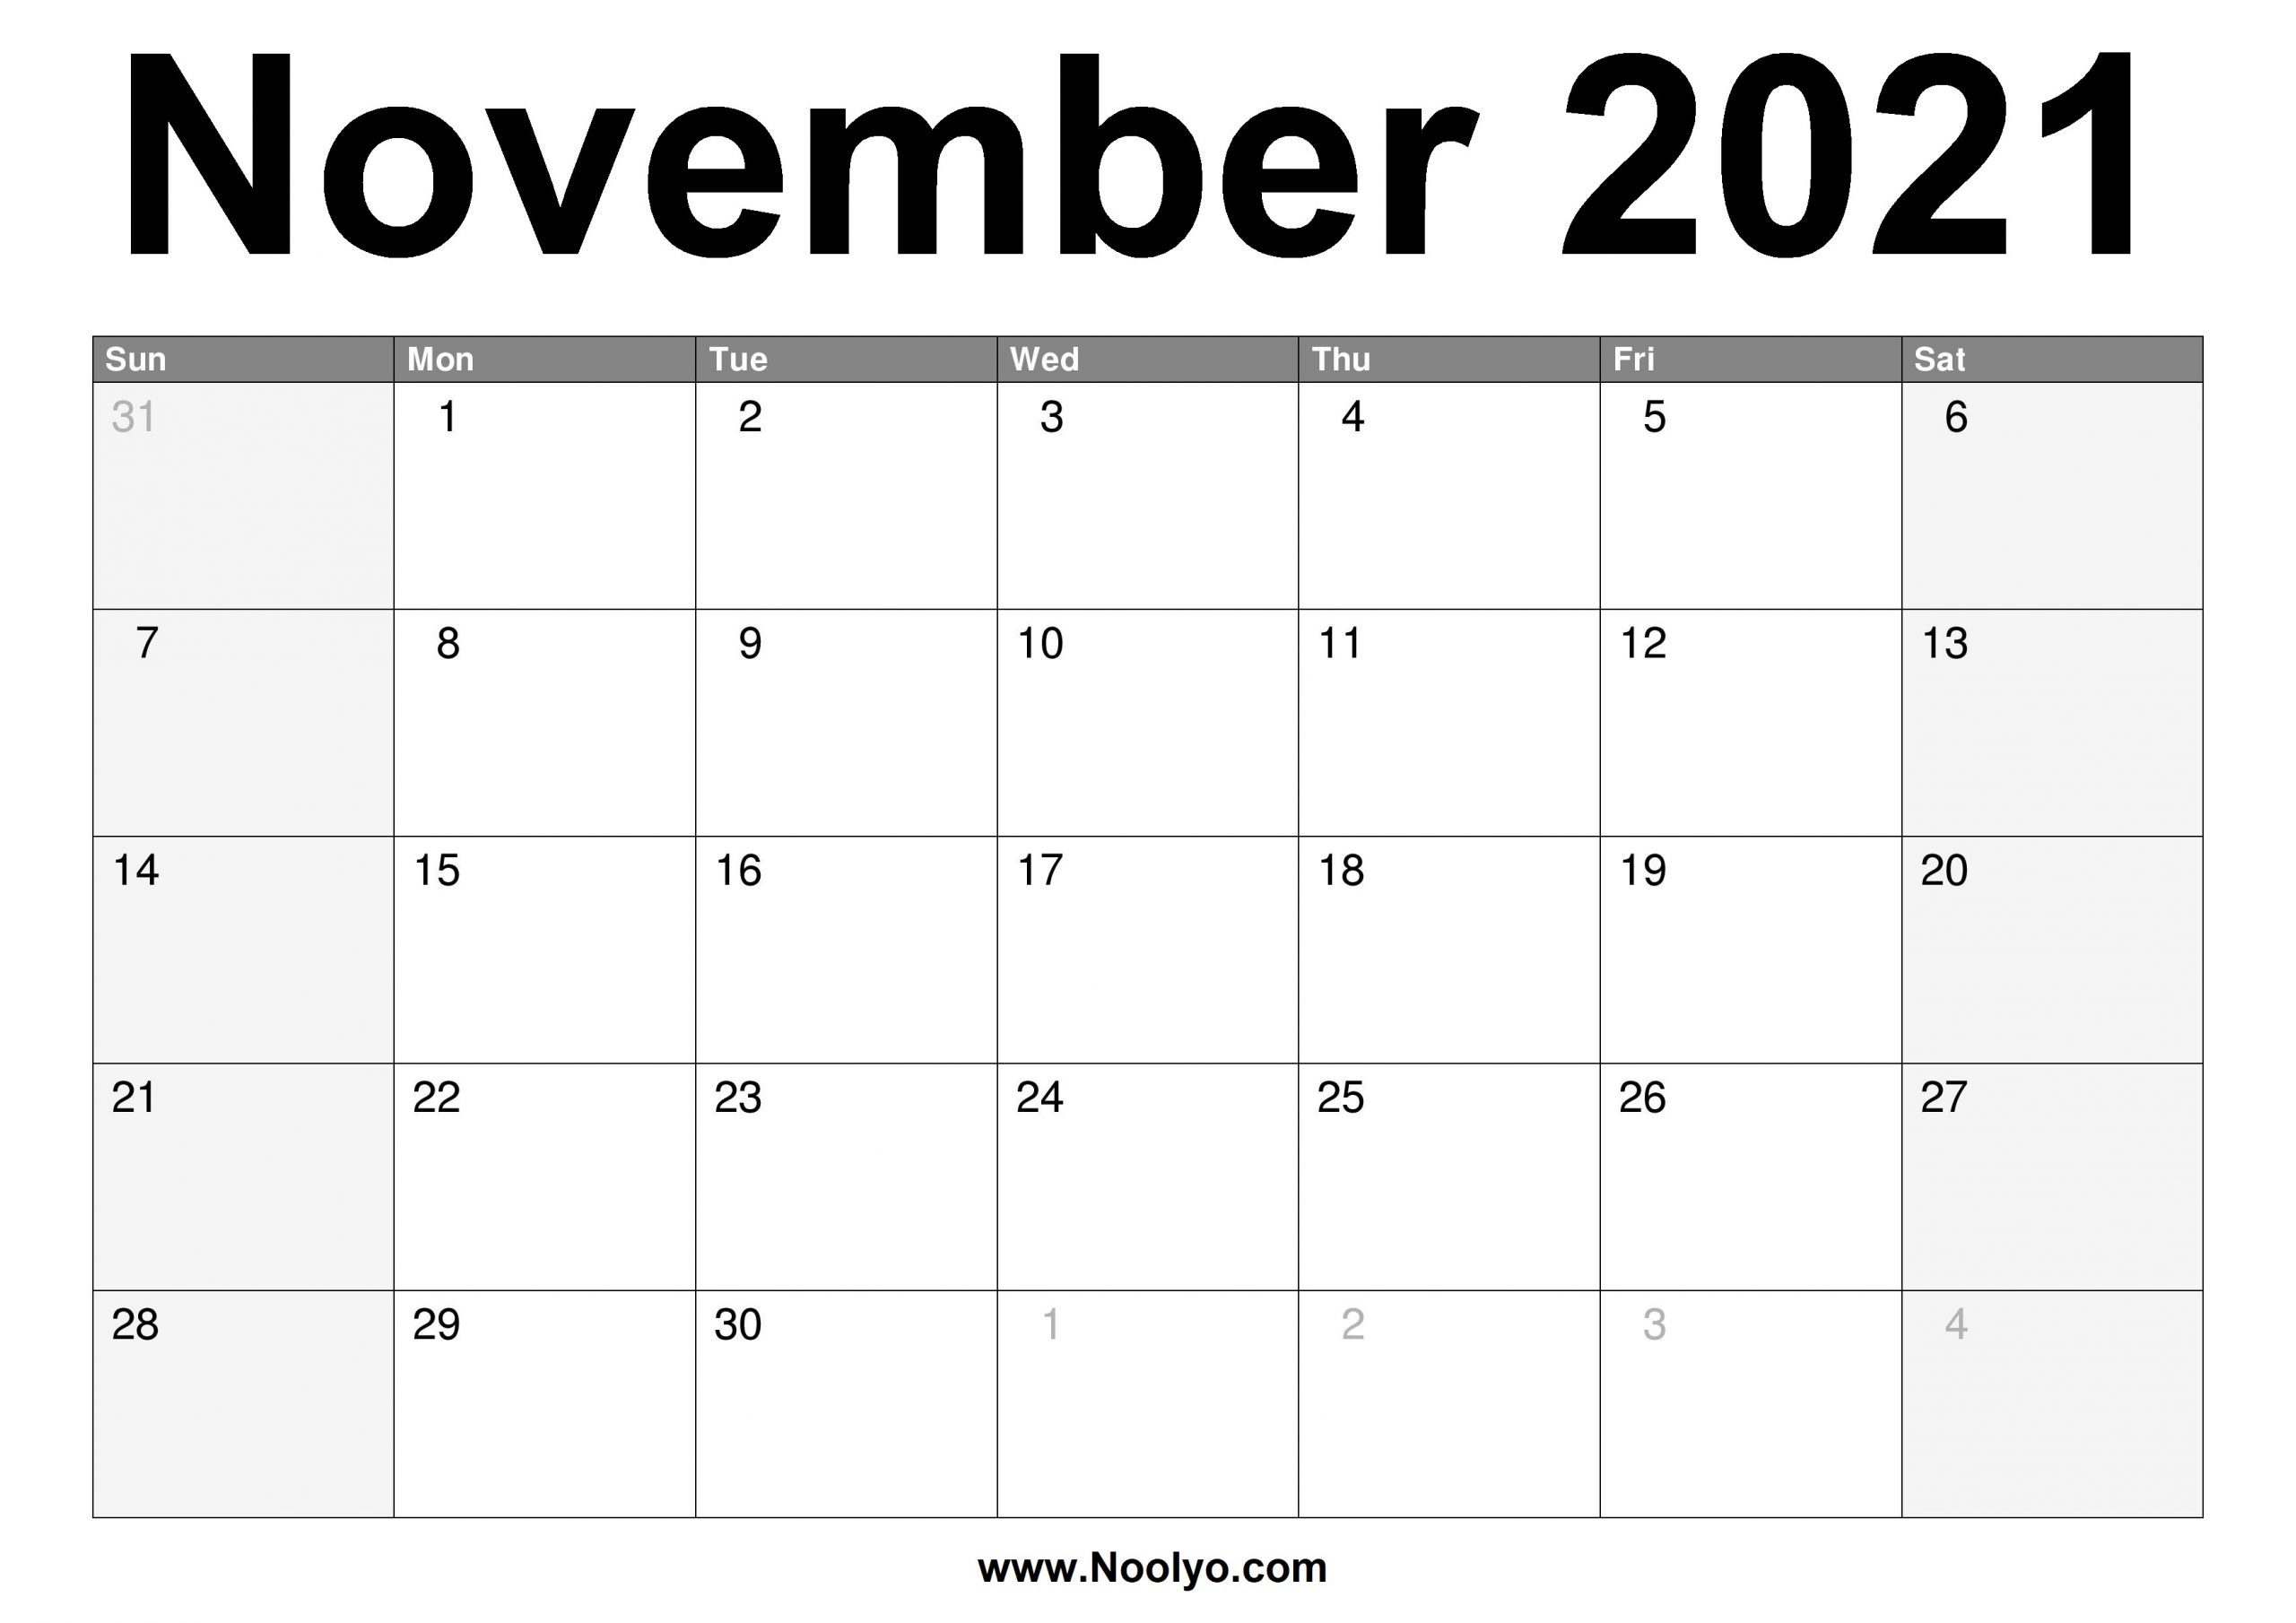 Download November 2021 Calendar Jpg | Lunar Calendar November 2021 Calendar Xl